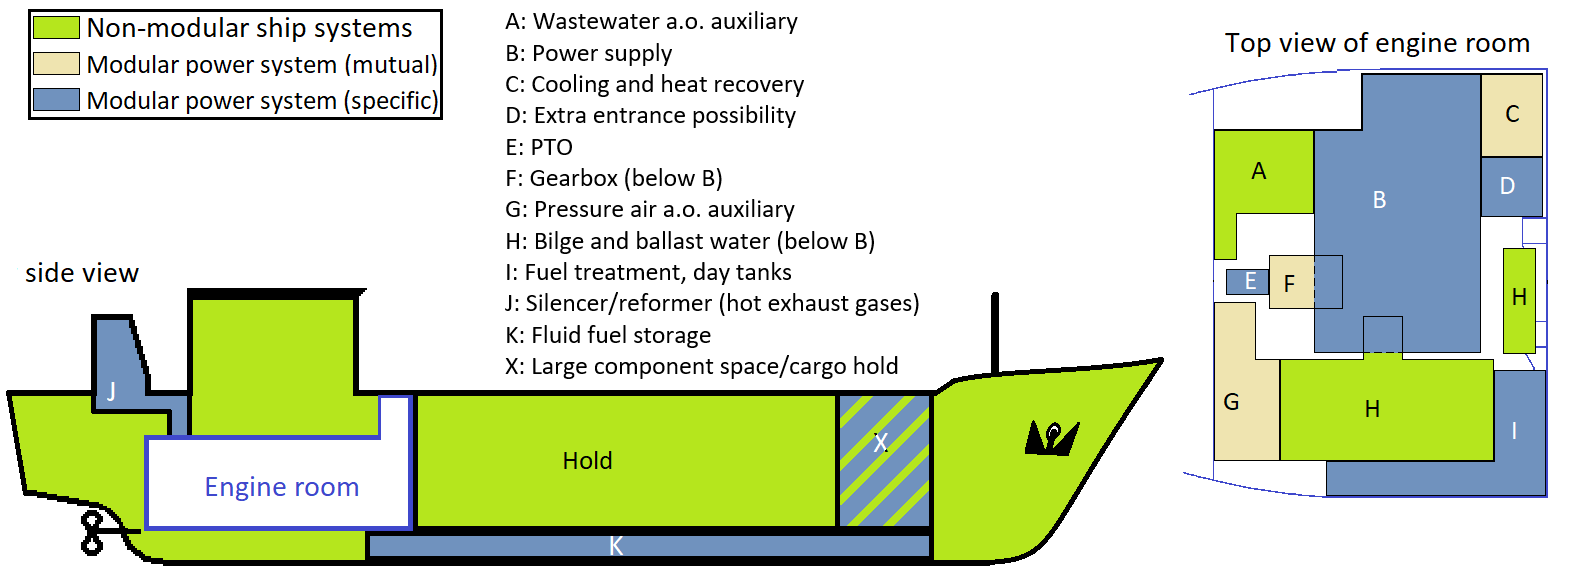 Modular and non-modular parts of the ship's system_Julia Benedictus